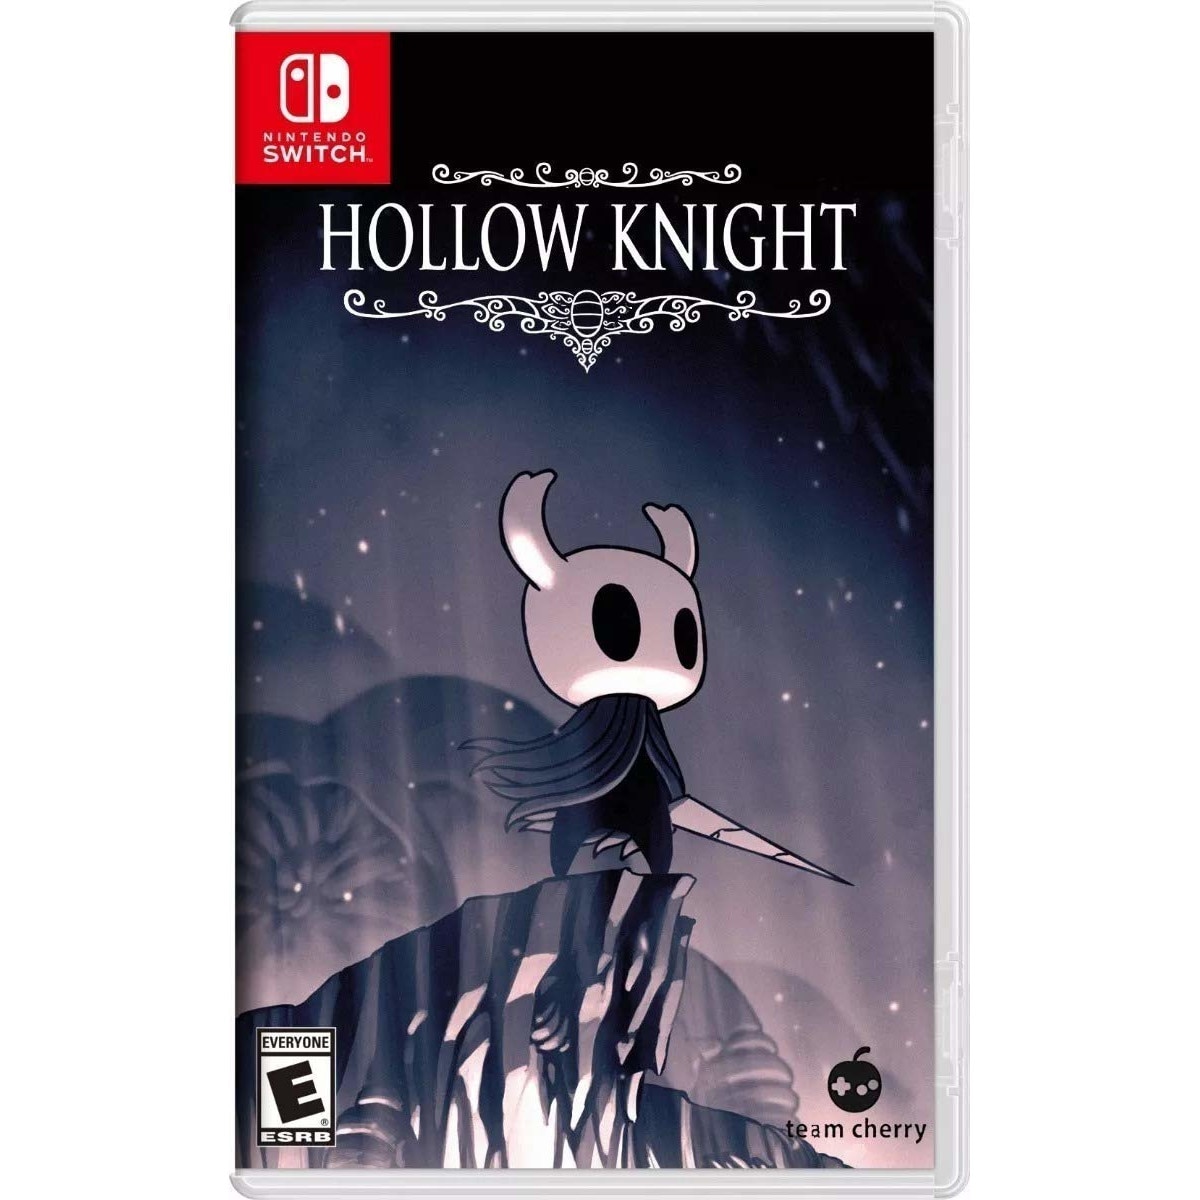 Hollow nintendo switch. Hollow Knight на Нинтендо свитч. Игра Hollow Knight для Nintendo Switch. Hollow Knight Nintendo. Hollow Knight Nintendo Switch картридж.